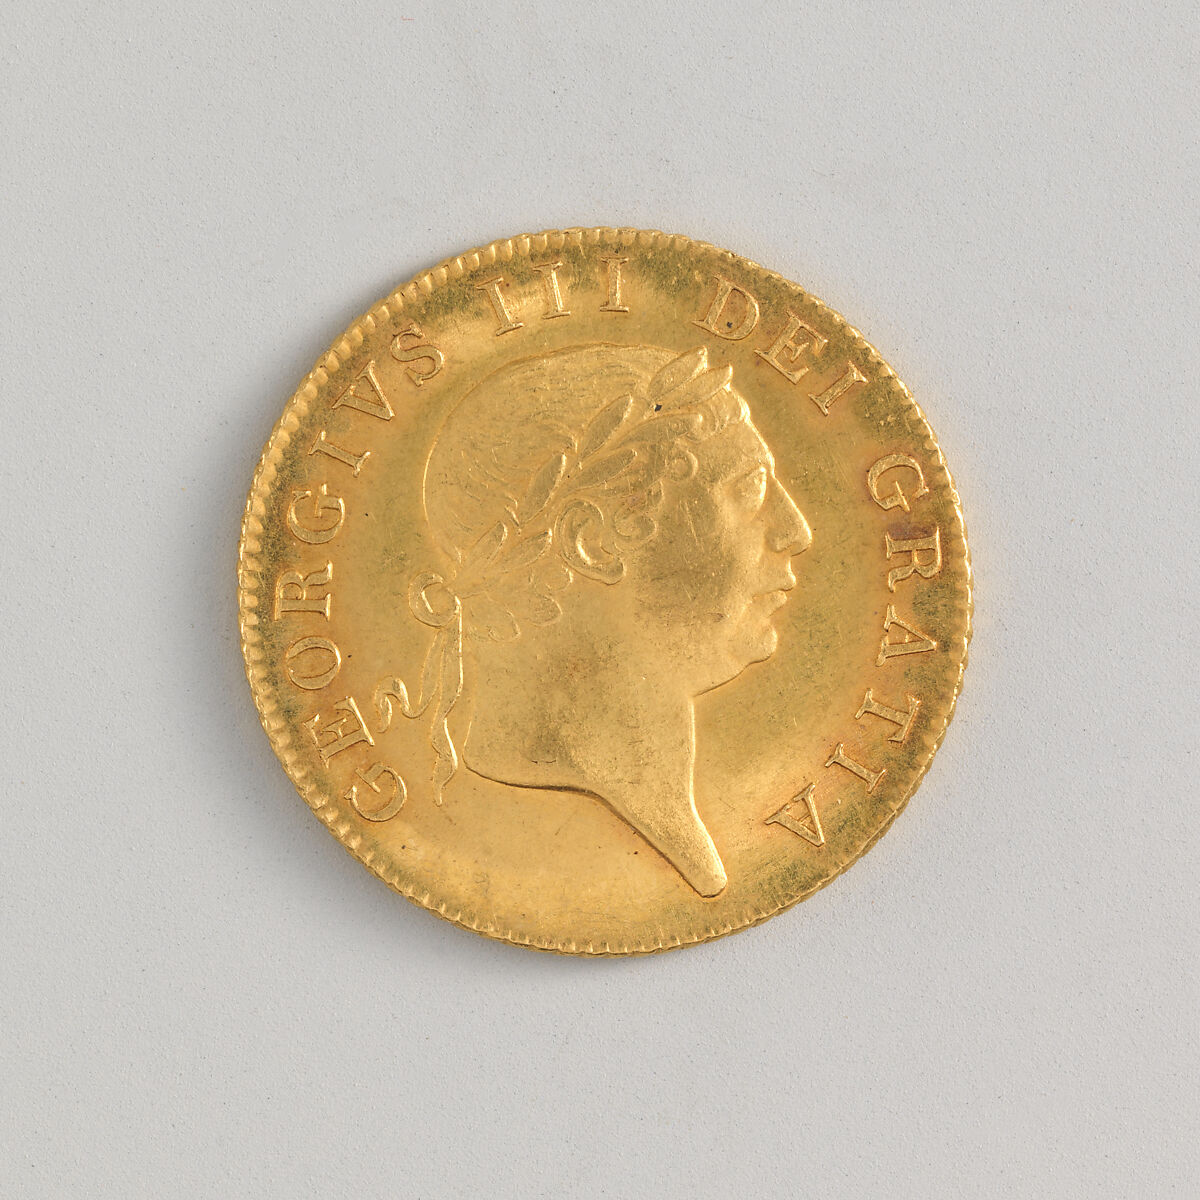 George III guinea, "Military" type, Medalist: Lewis Pingo (1743–1830), Gold, British 